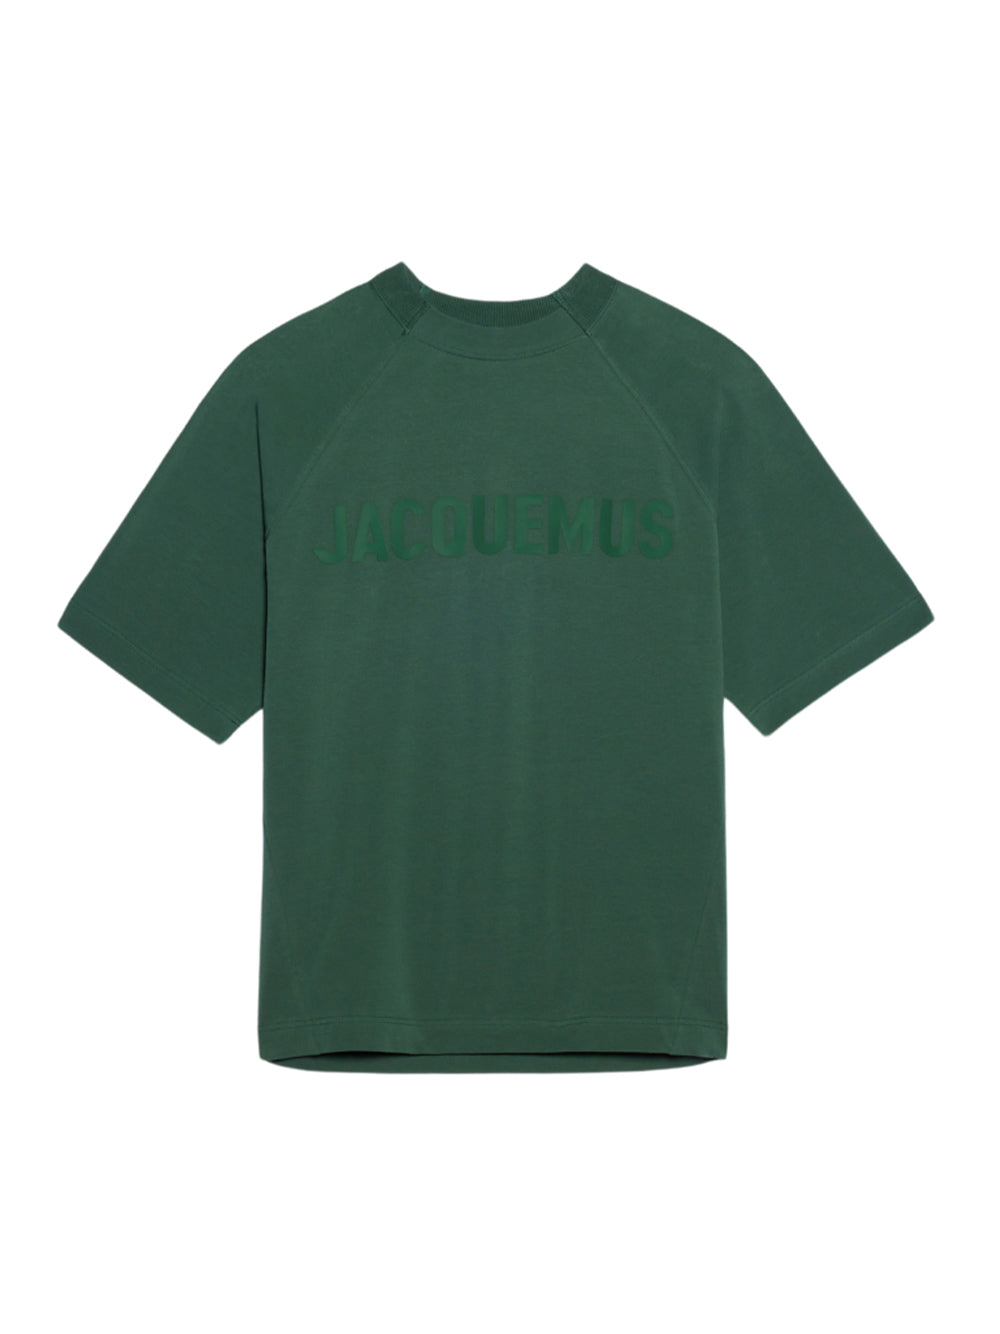 Le T-Shirt Typo (Dark Green)